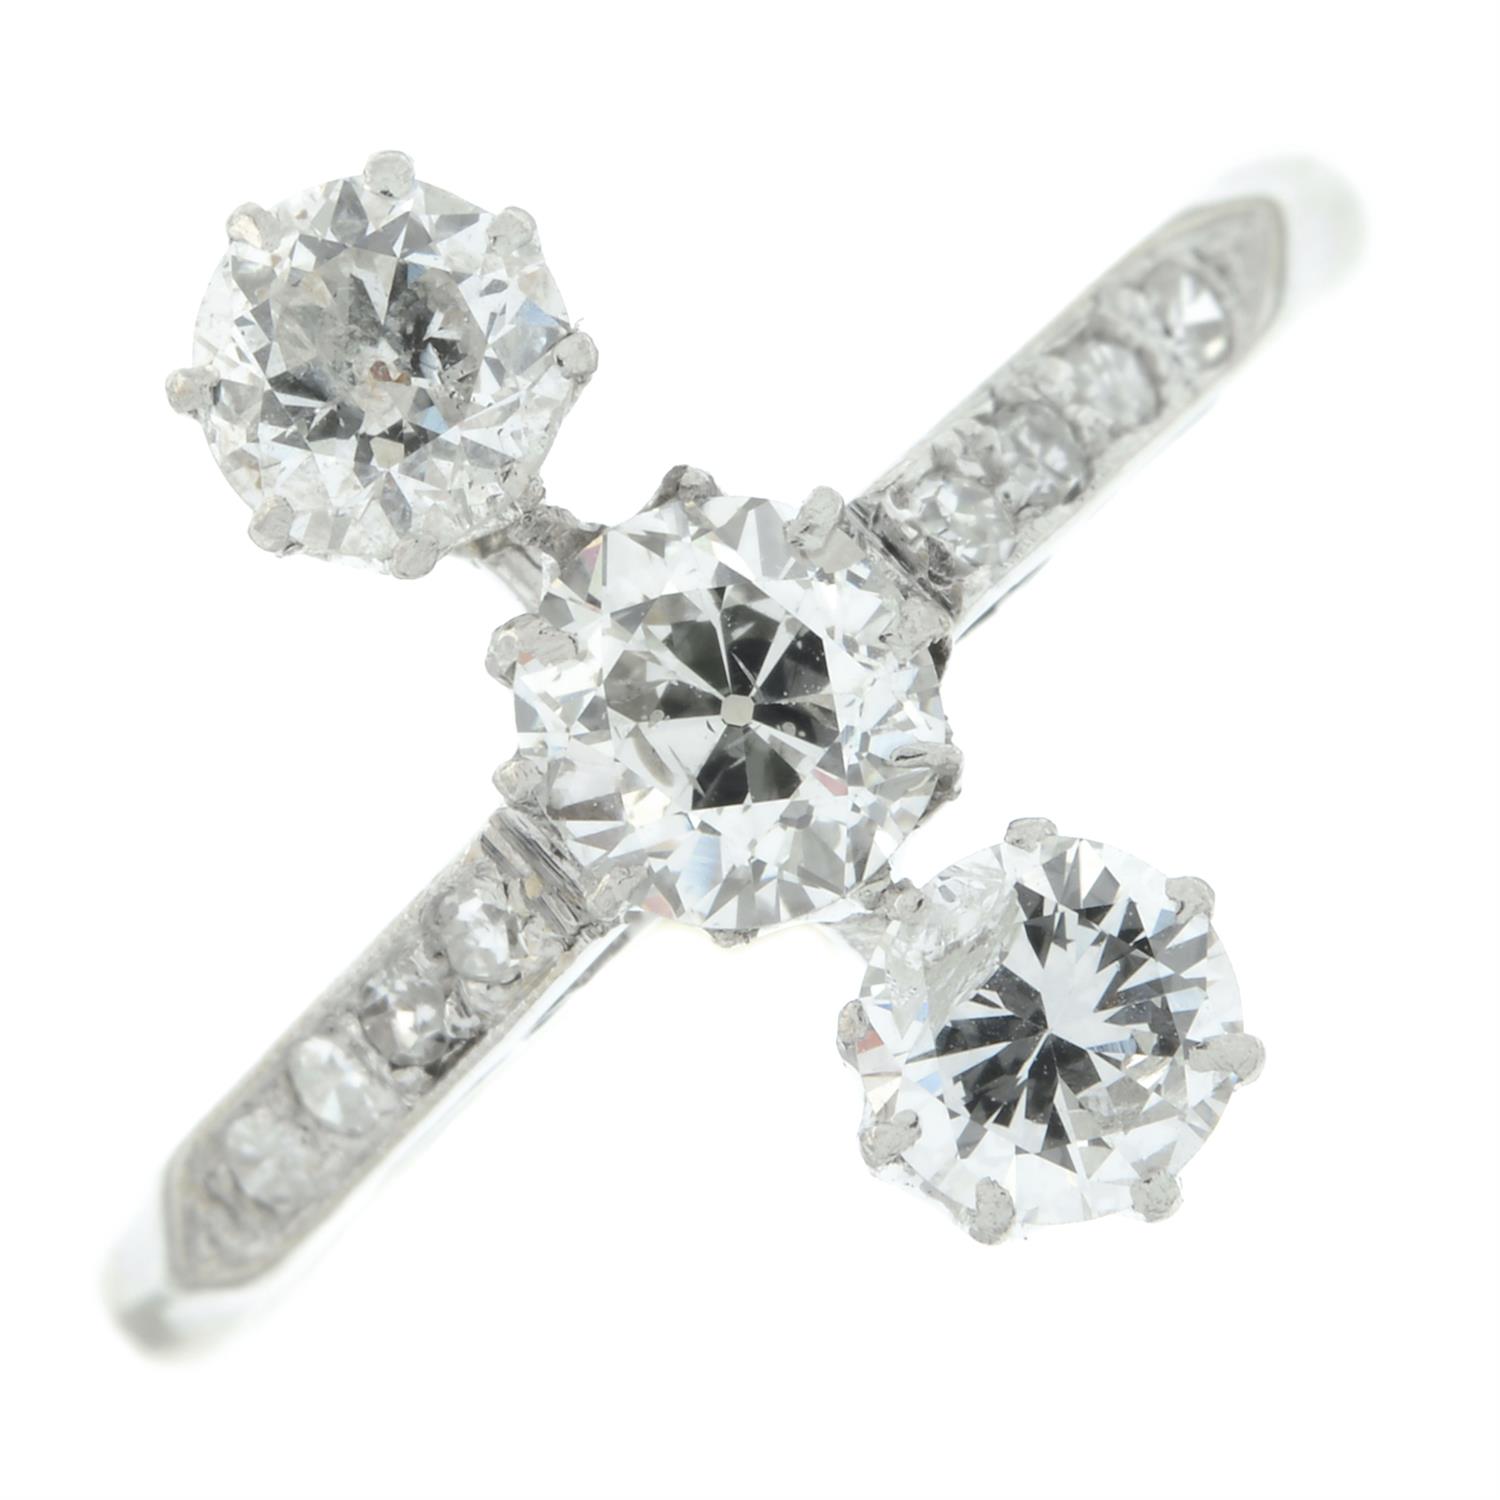 Early 20th century vari-cut diamond dress ring